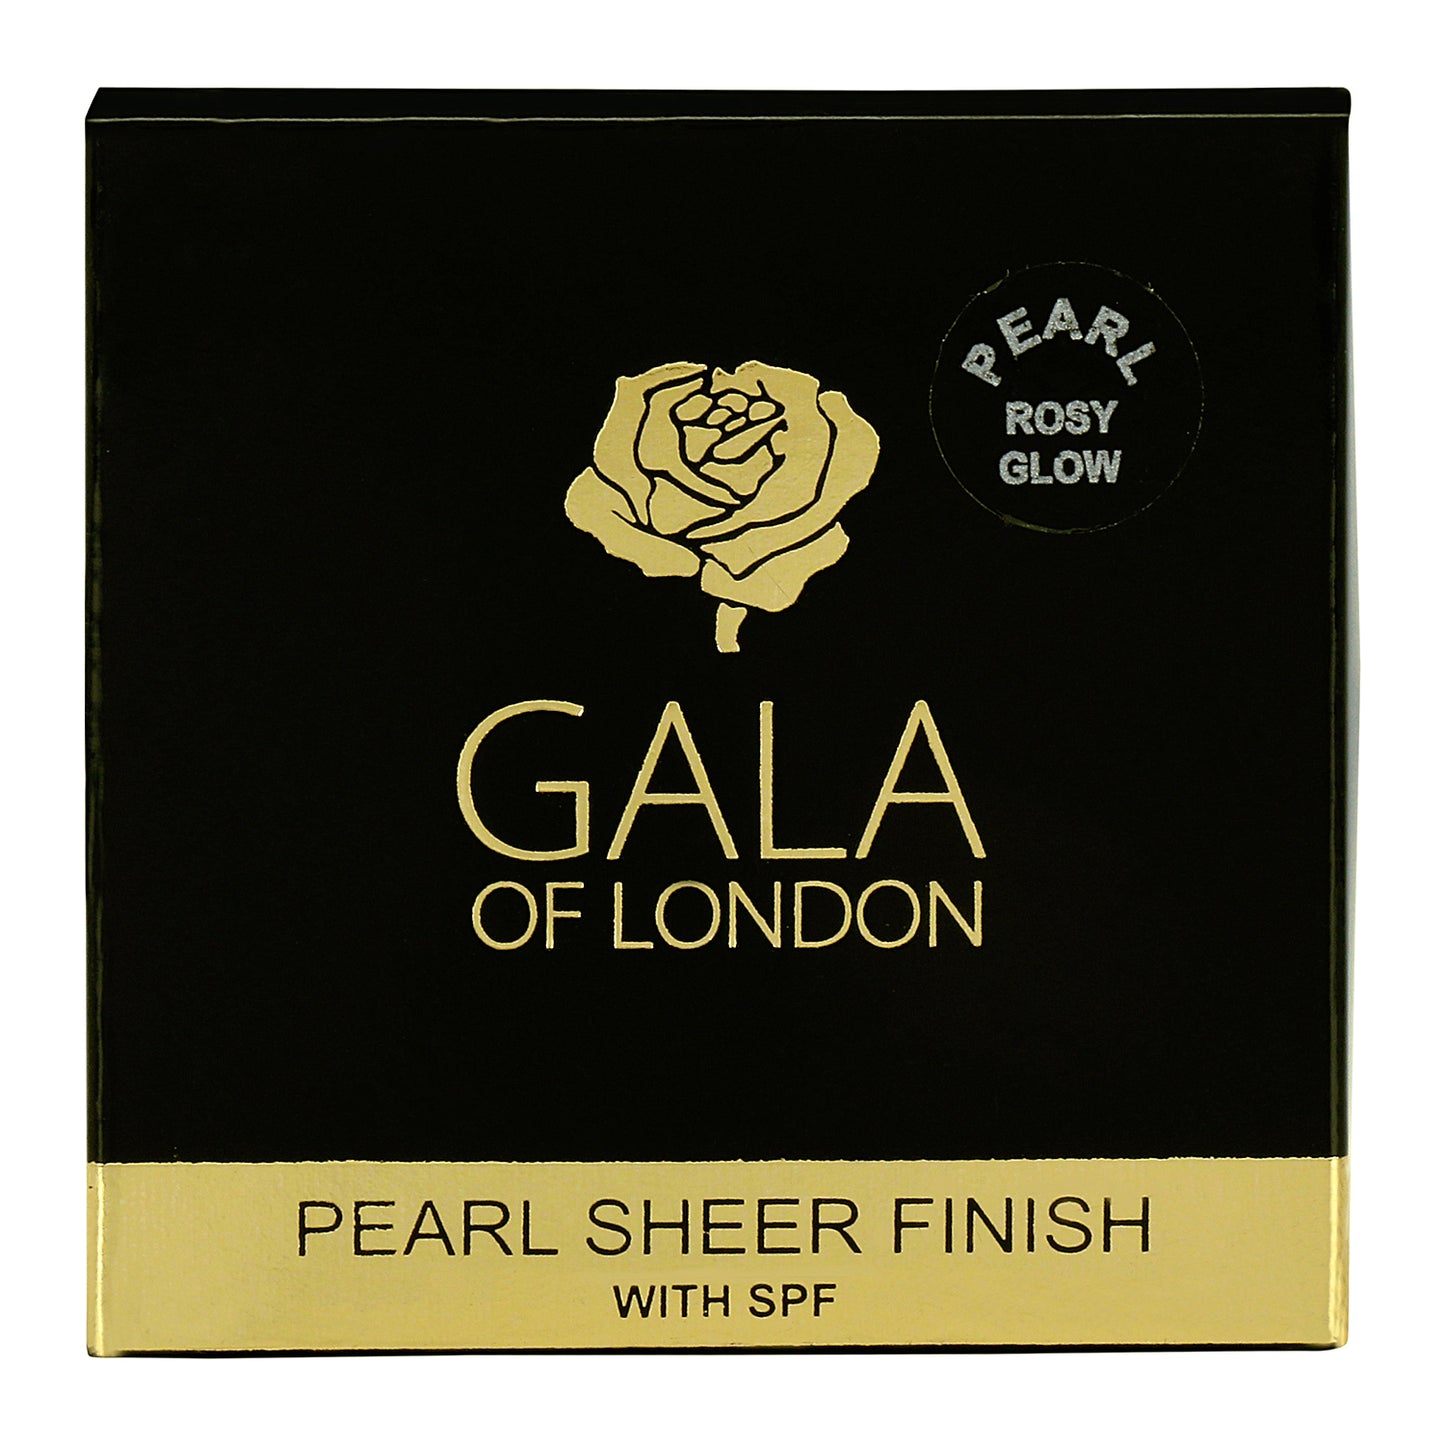 Gala of London Pearl Sheer Finish 12g - Rosy Glow